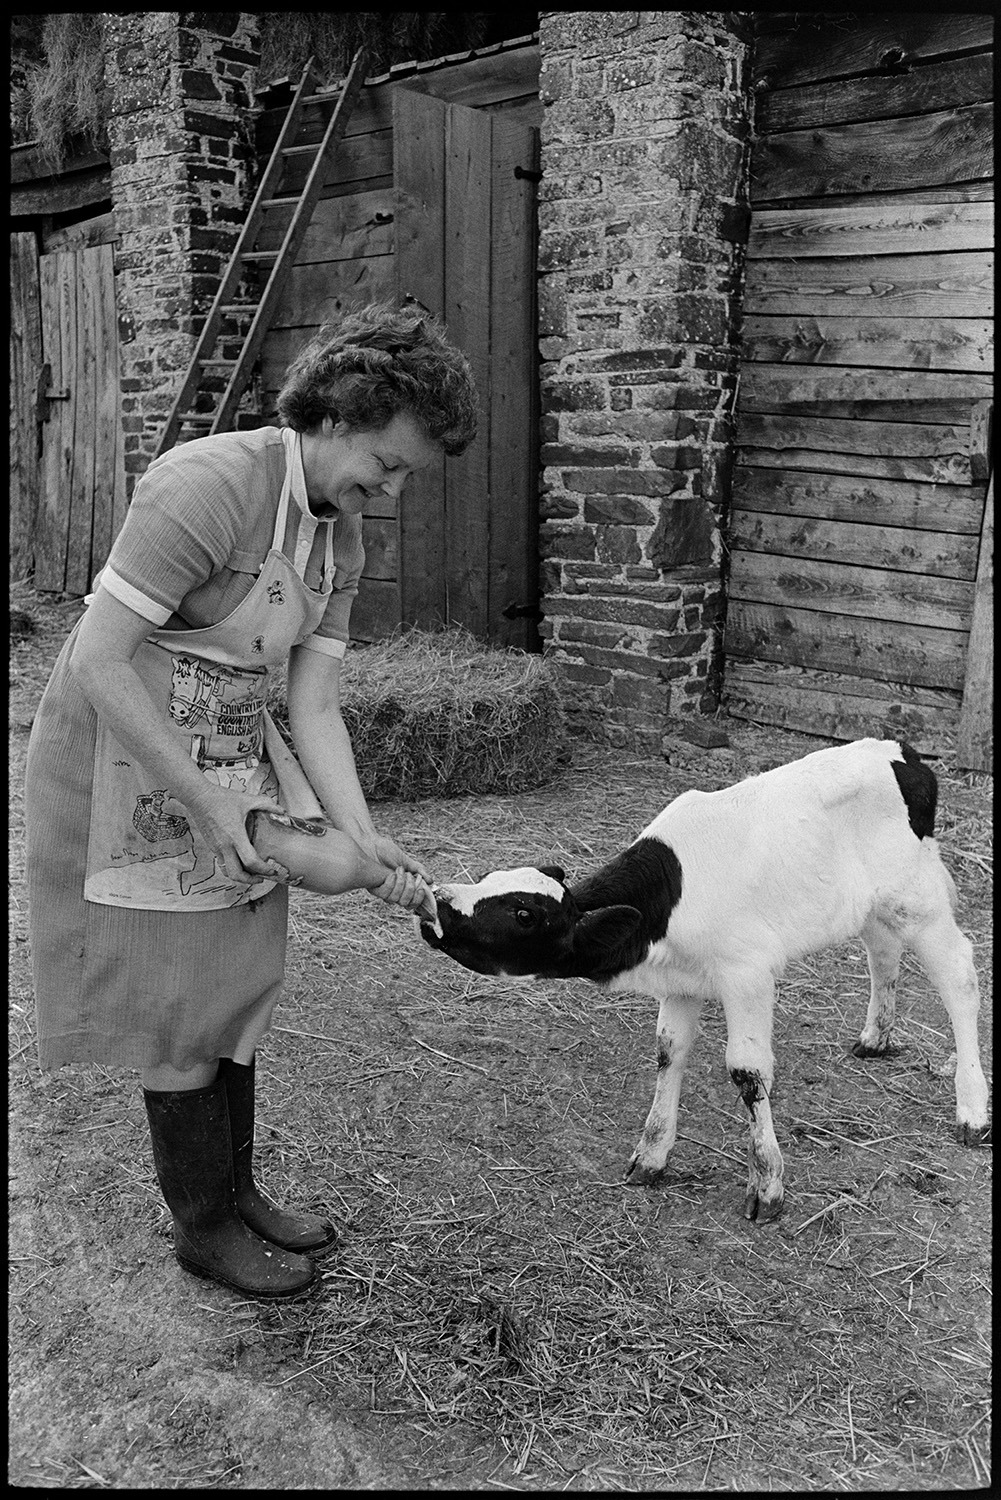 Woman, farmer's wife feeding calves. 
[Pam Down bottle feeding a calf in the farmyard at Spittle Farm, Chulmleigh. A hay bale and barn can be seen in the background.]